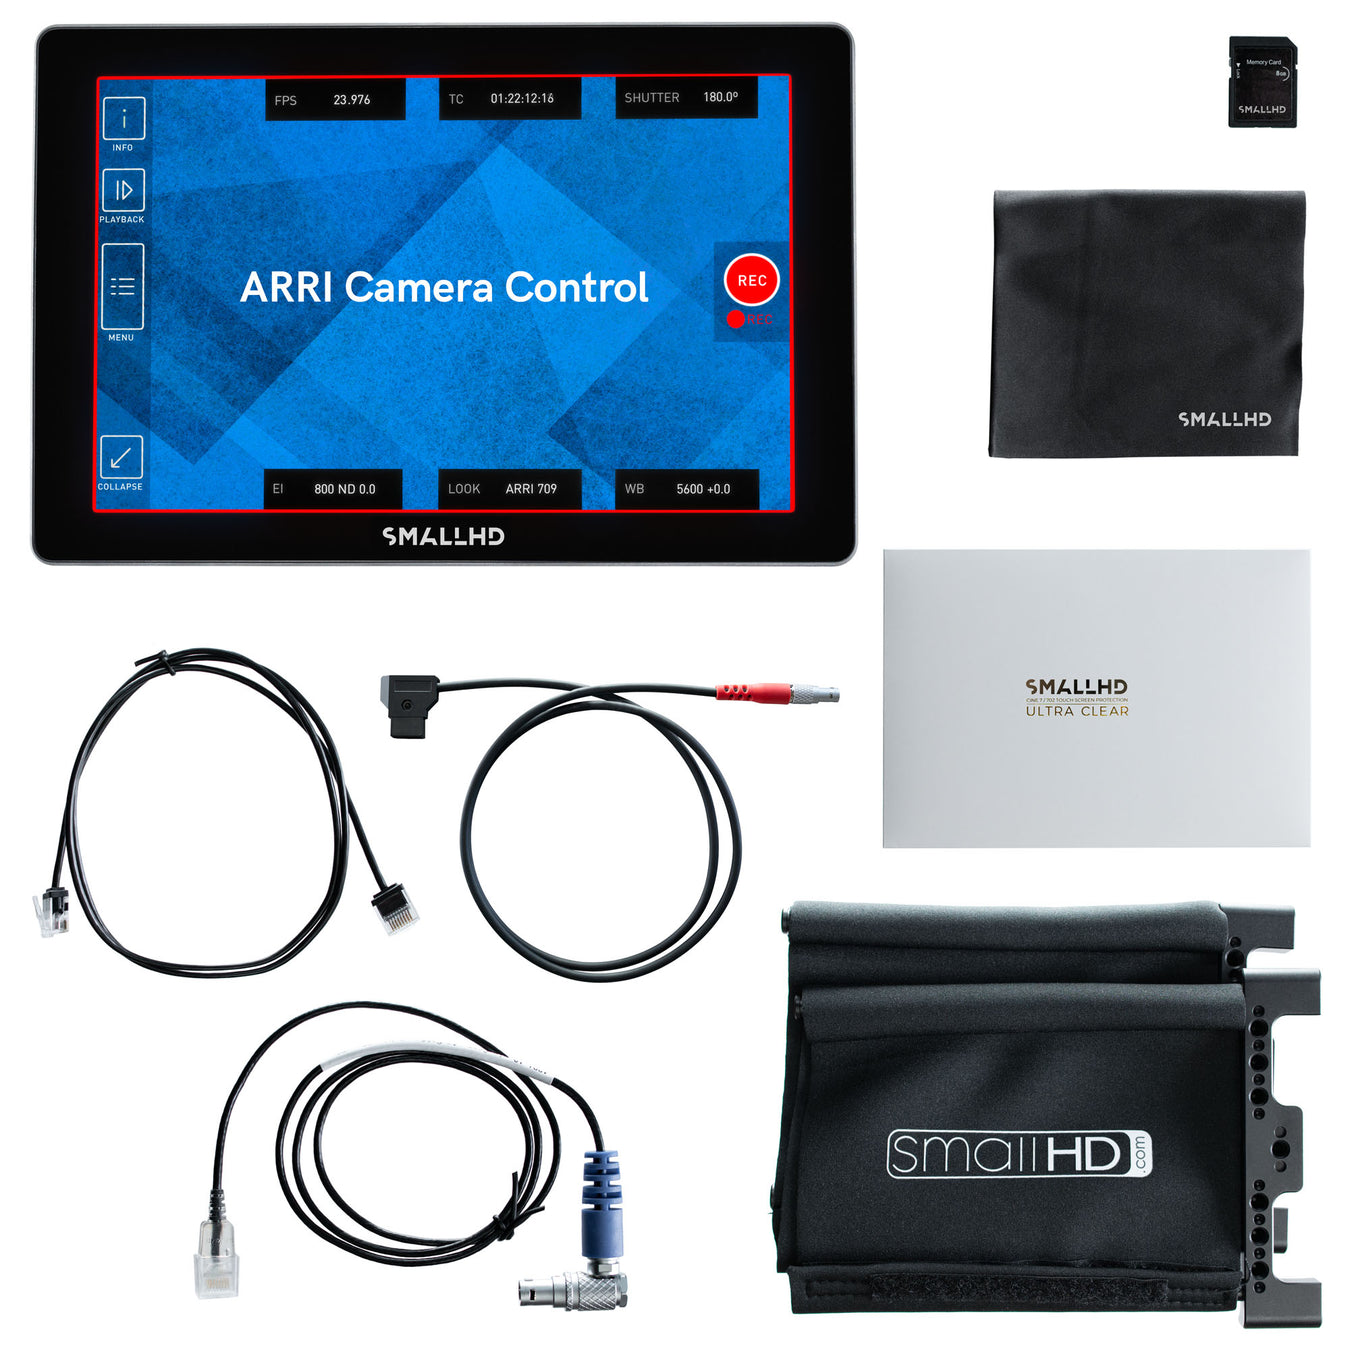 ARRI Camera Control